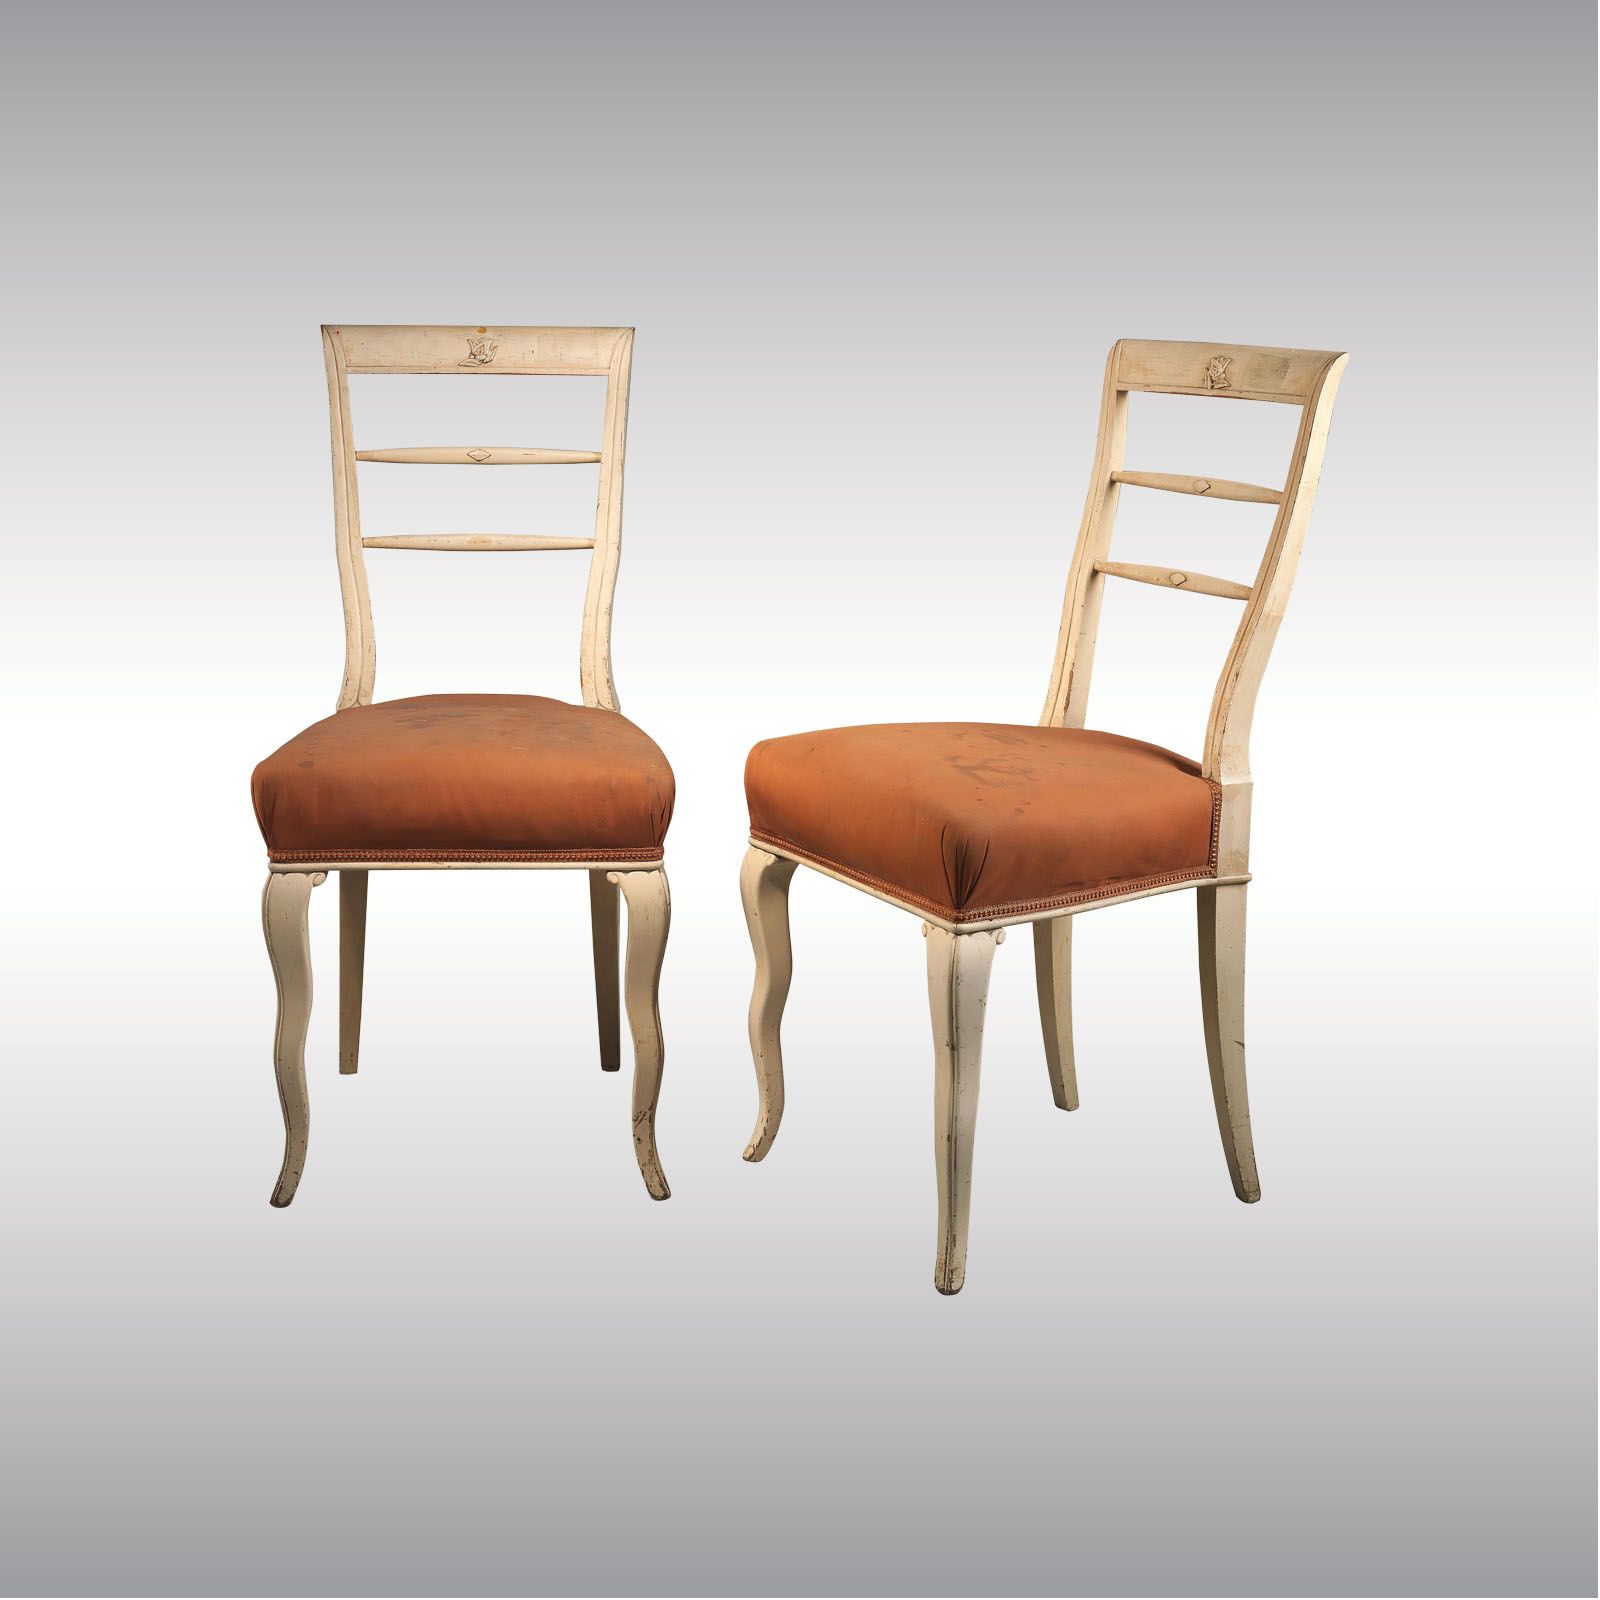 WOKA LAMPS VIENNA - OrderNr.: 80068|Art Deco Chairs Dagobert Peche attr pair - Design: Dagobert Peche attributed